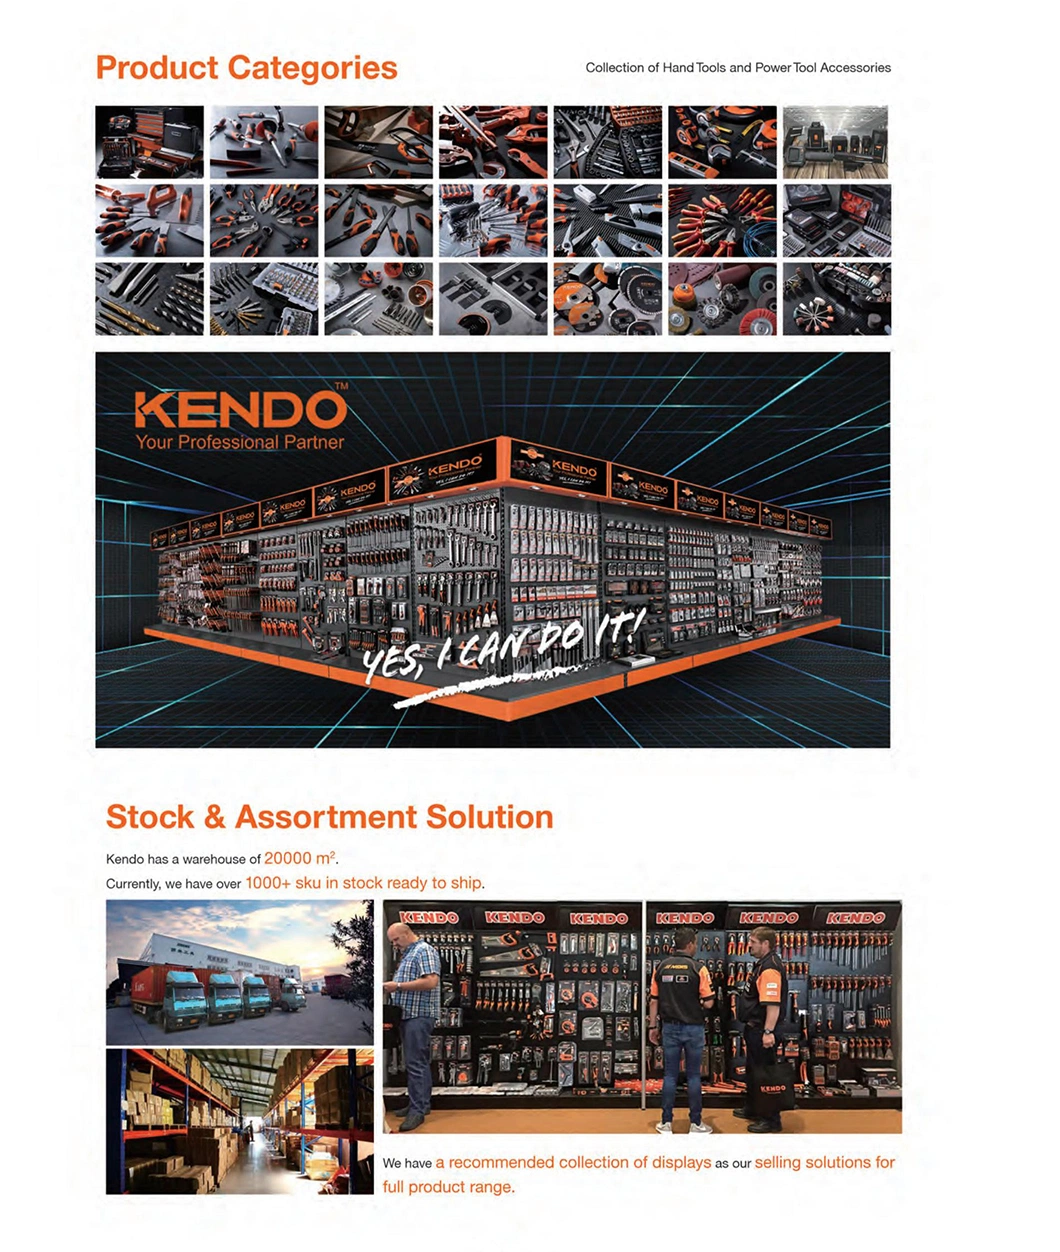 Kendo 161PC Aluminium Case Tool Set Portable Tool Box with Kendo Design Looking